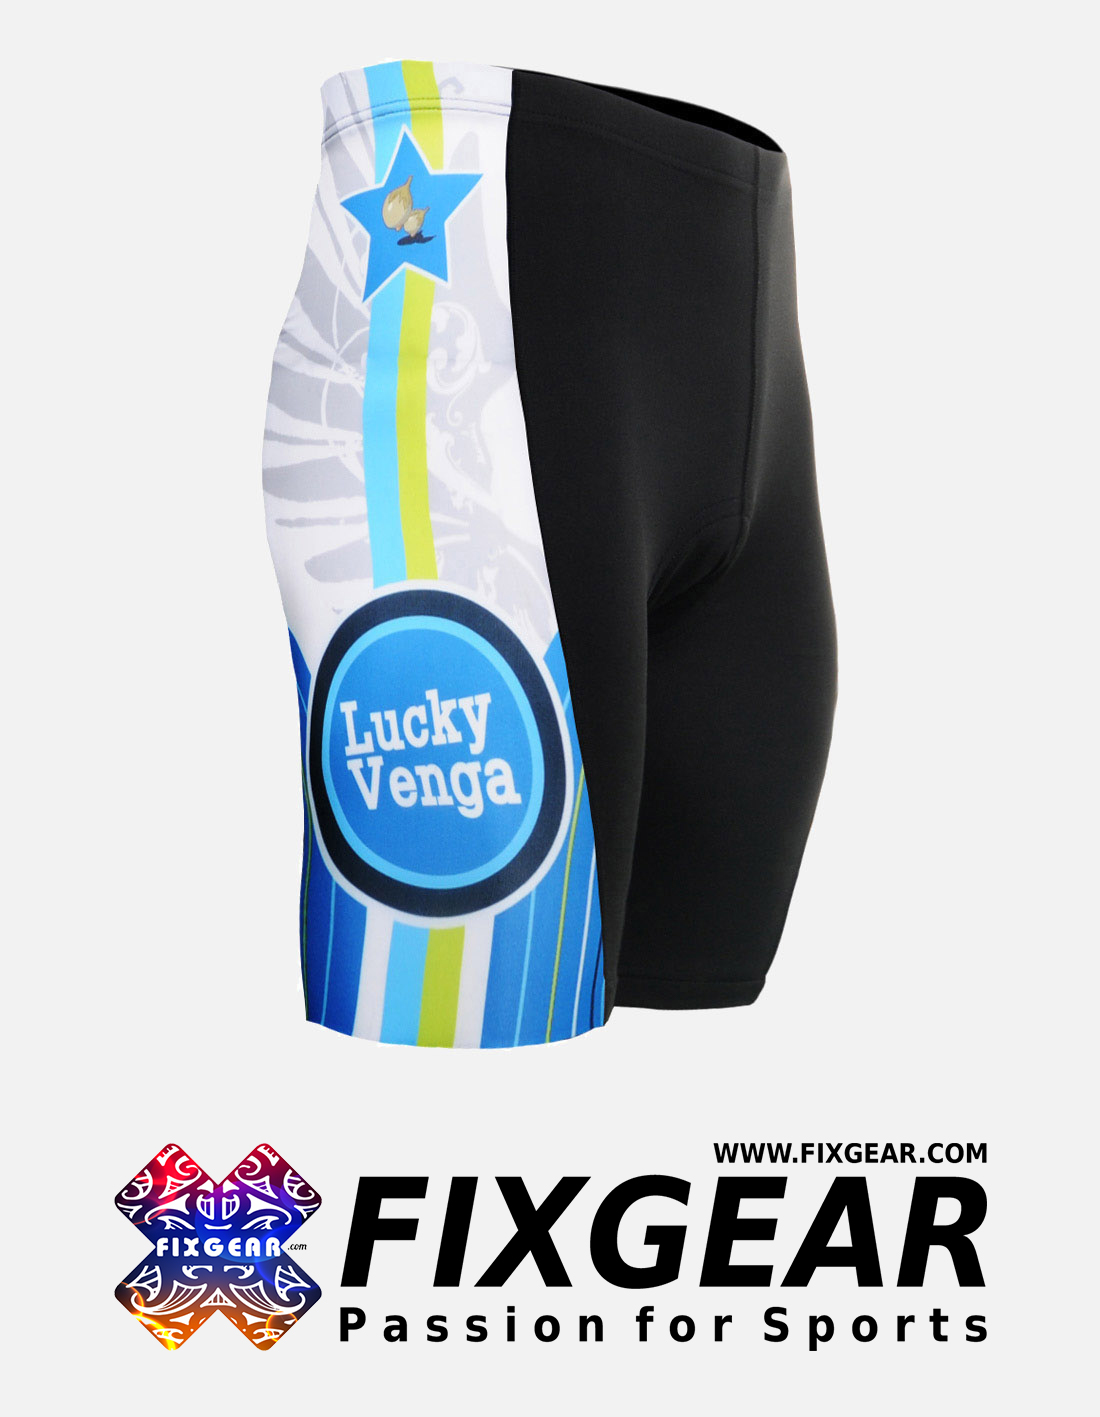 FIXGEAR ST-g2 Men's Cycling Cycling Padded Shorts